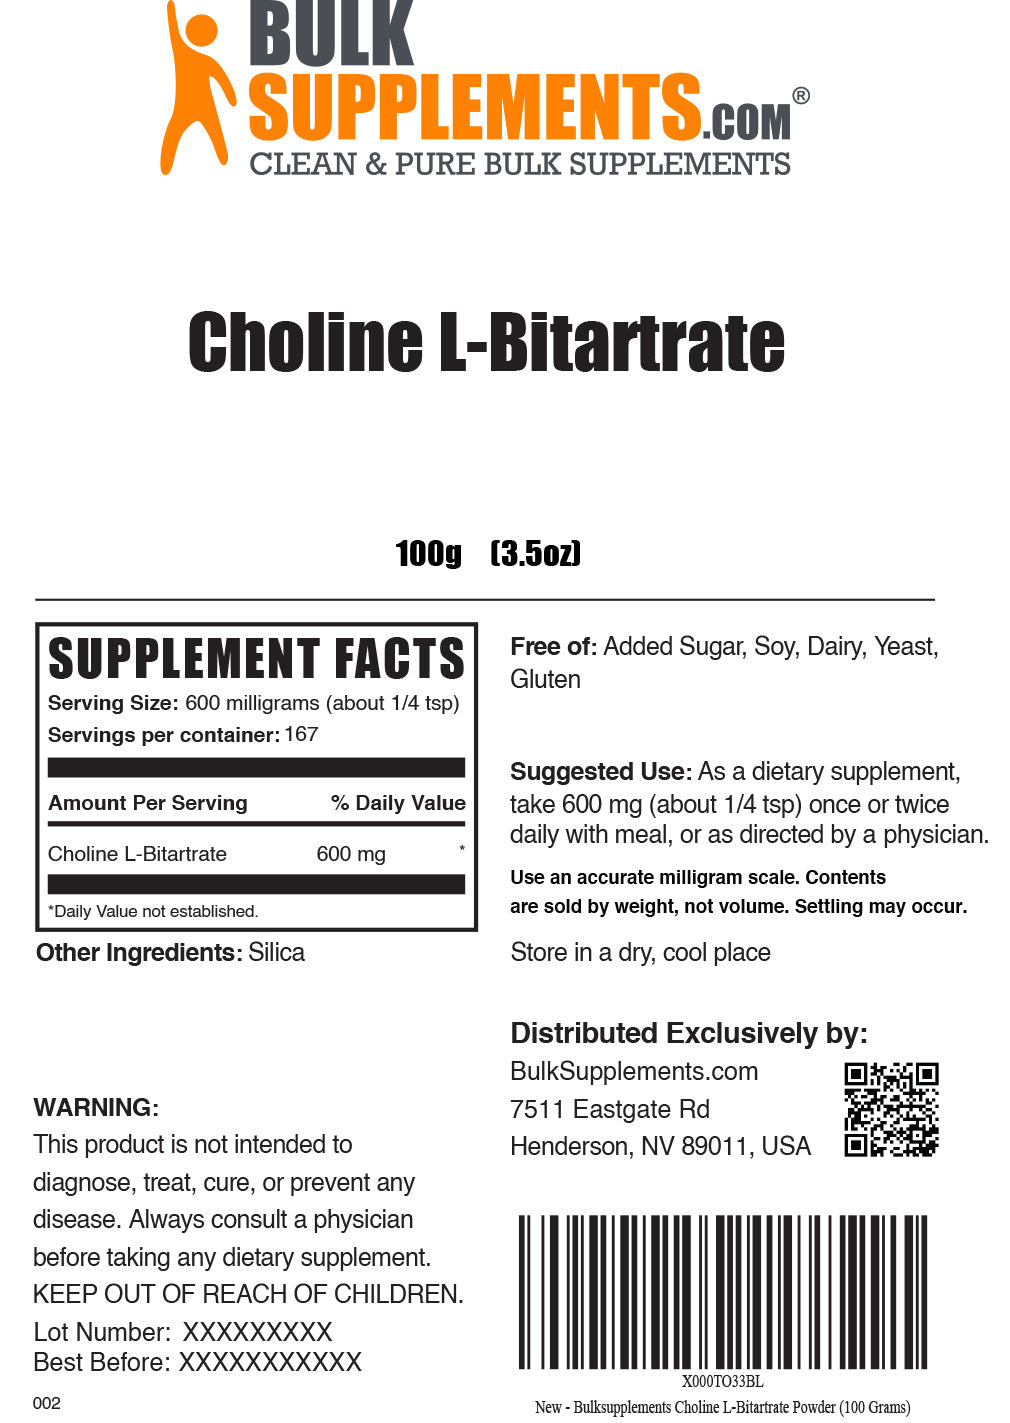 100g choline supplement facts label